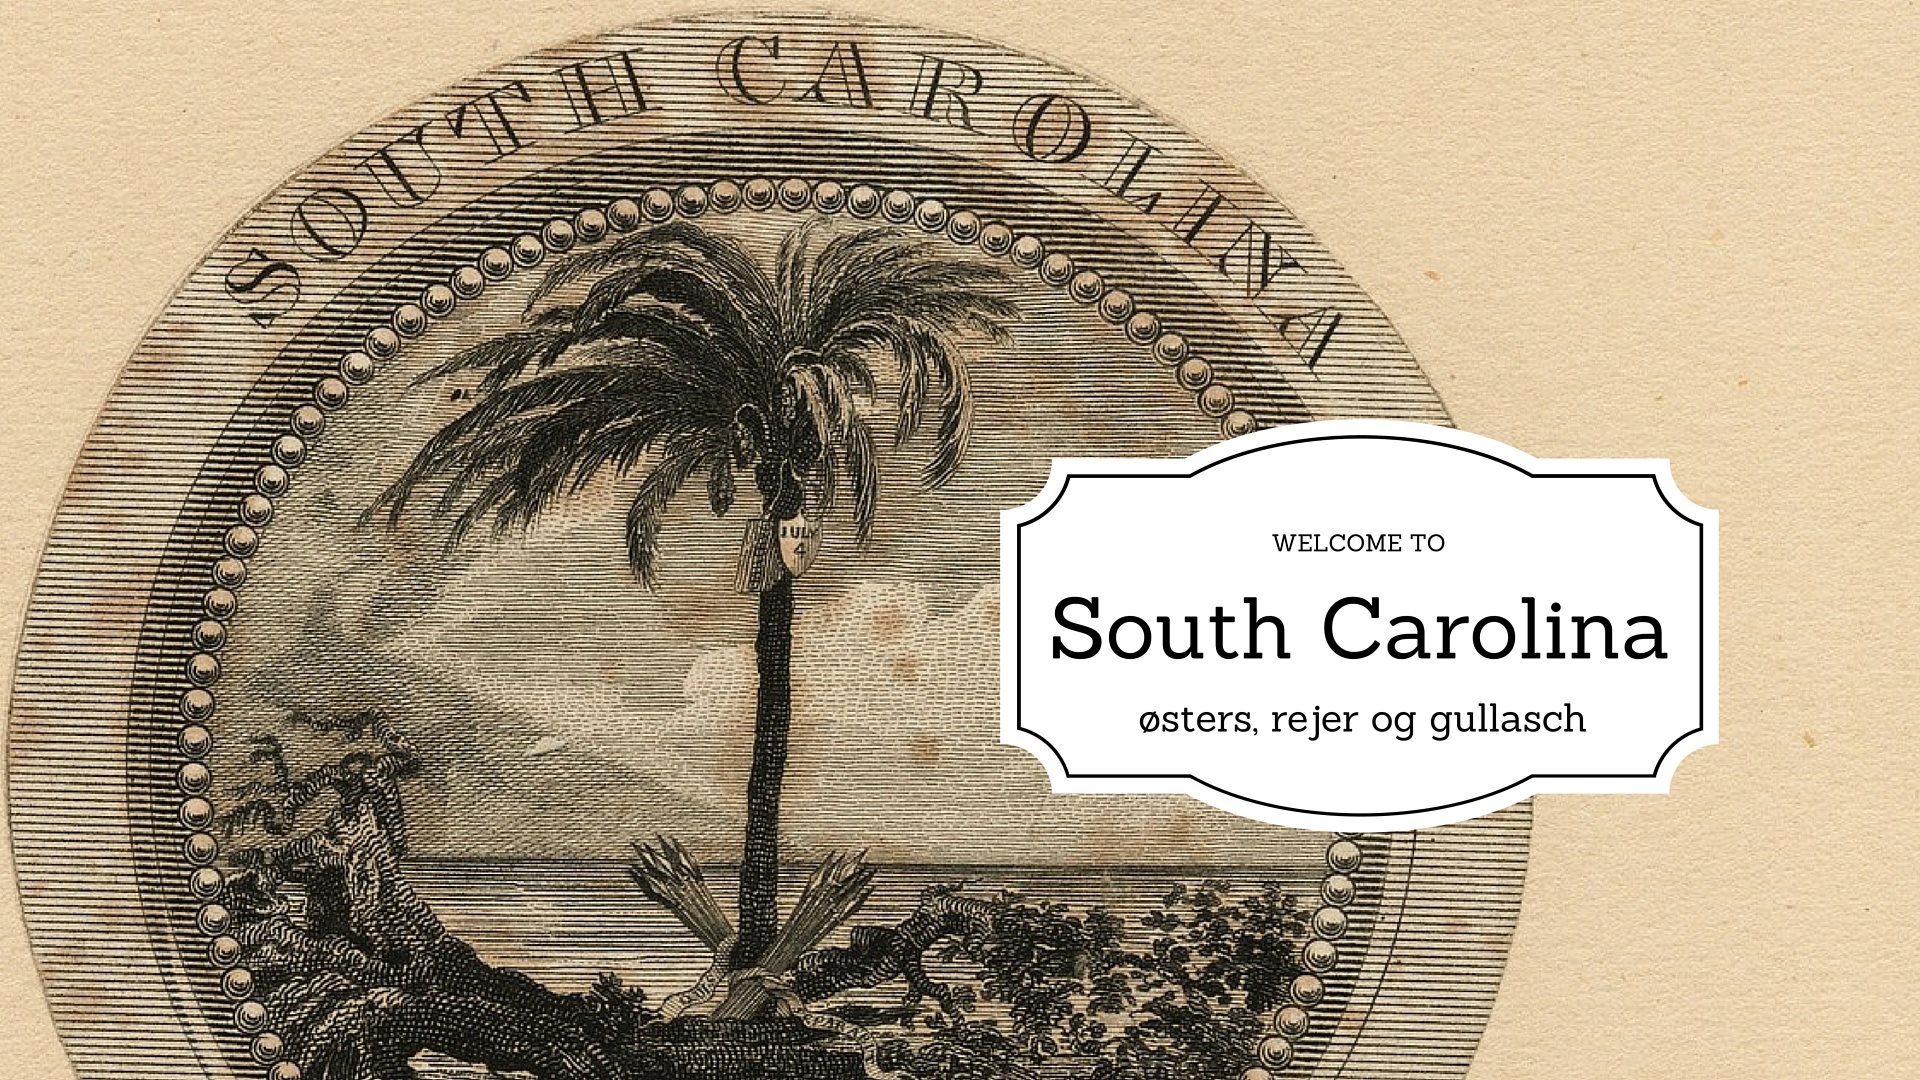 South Carolina = plantage-gullasch